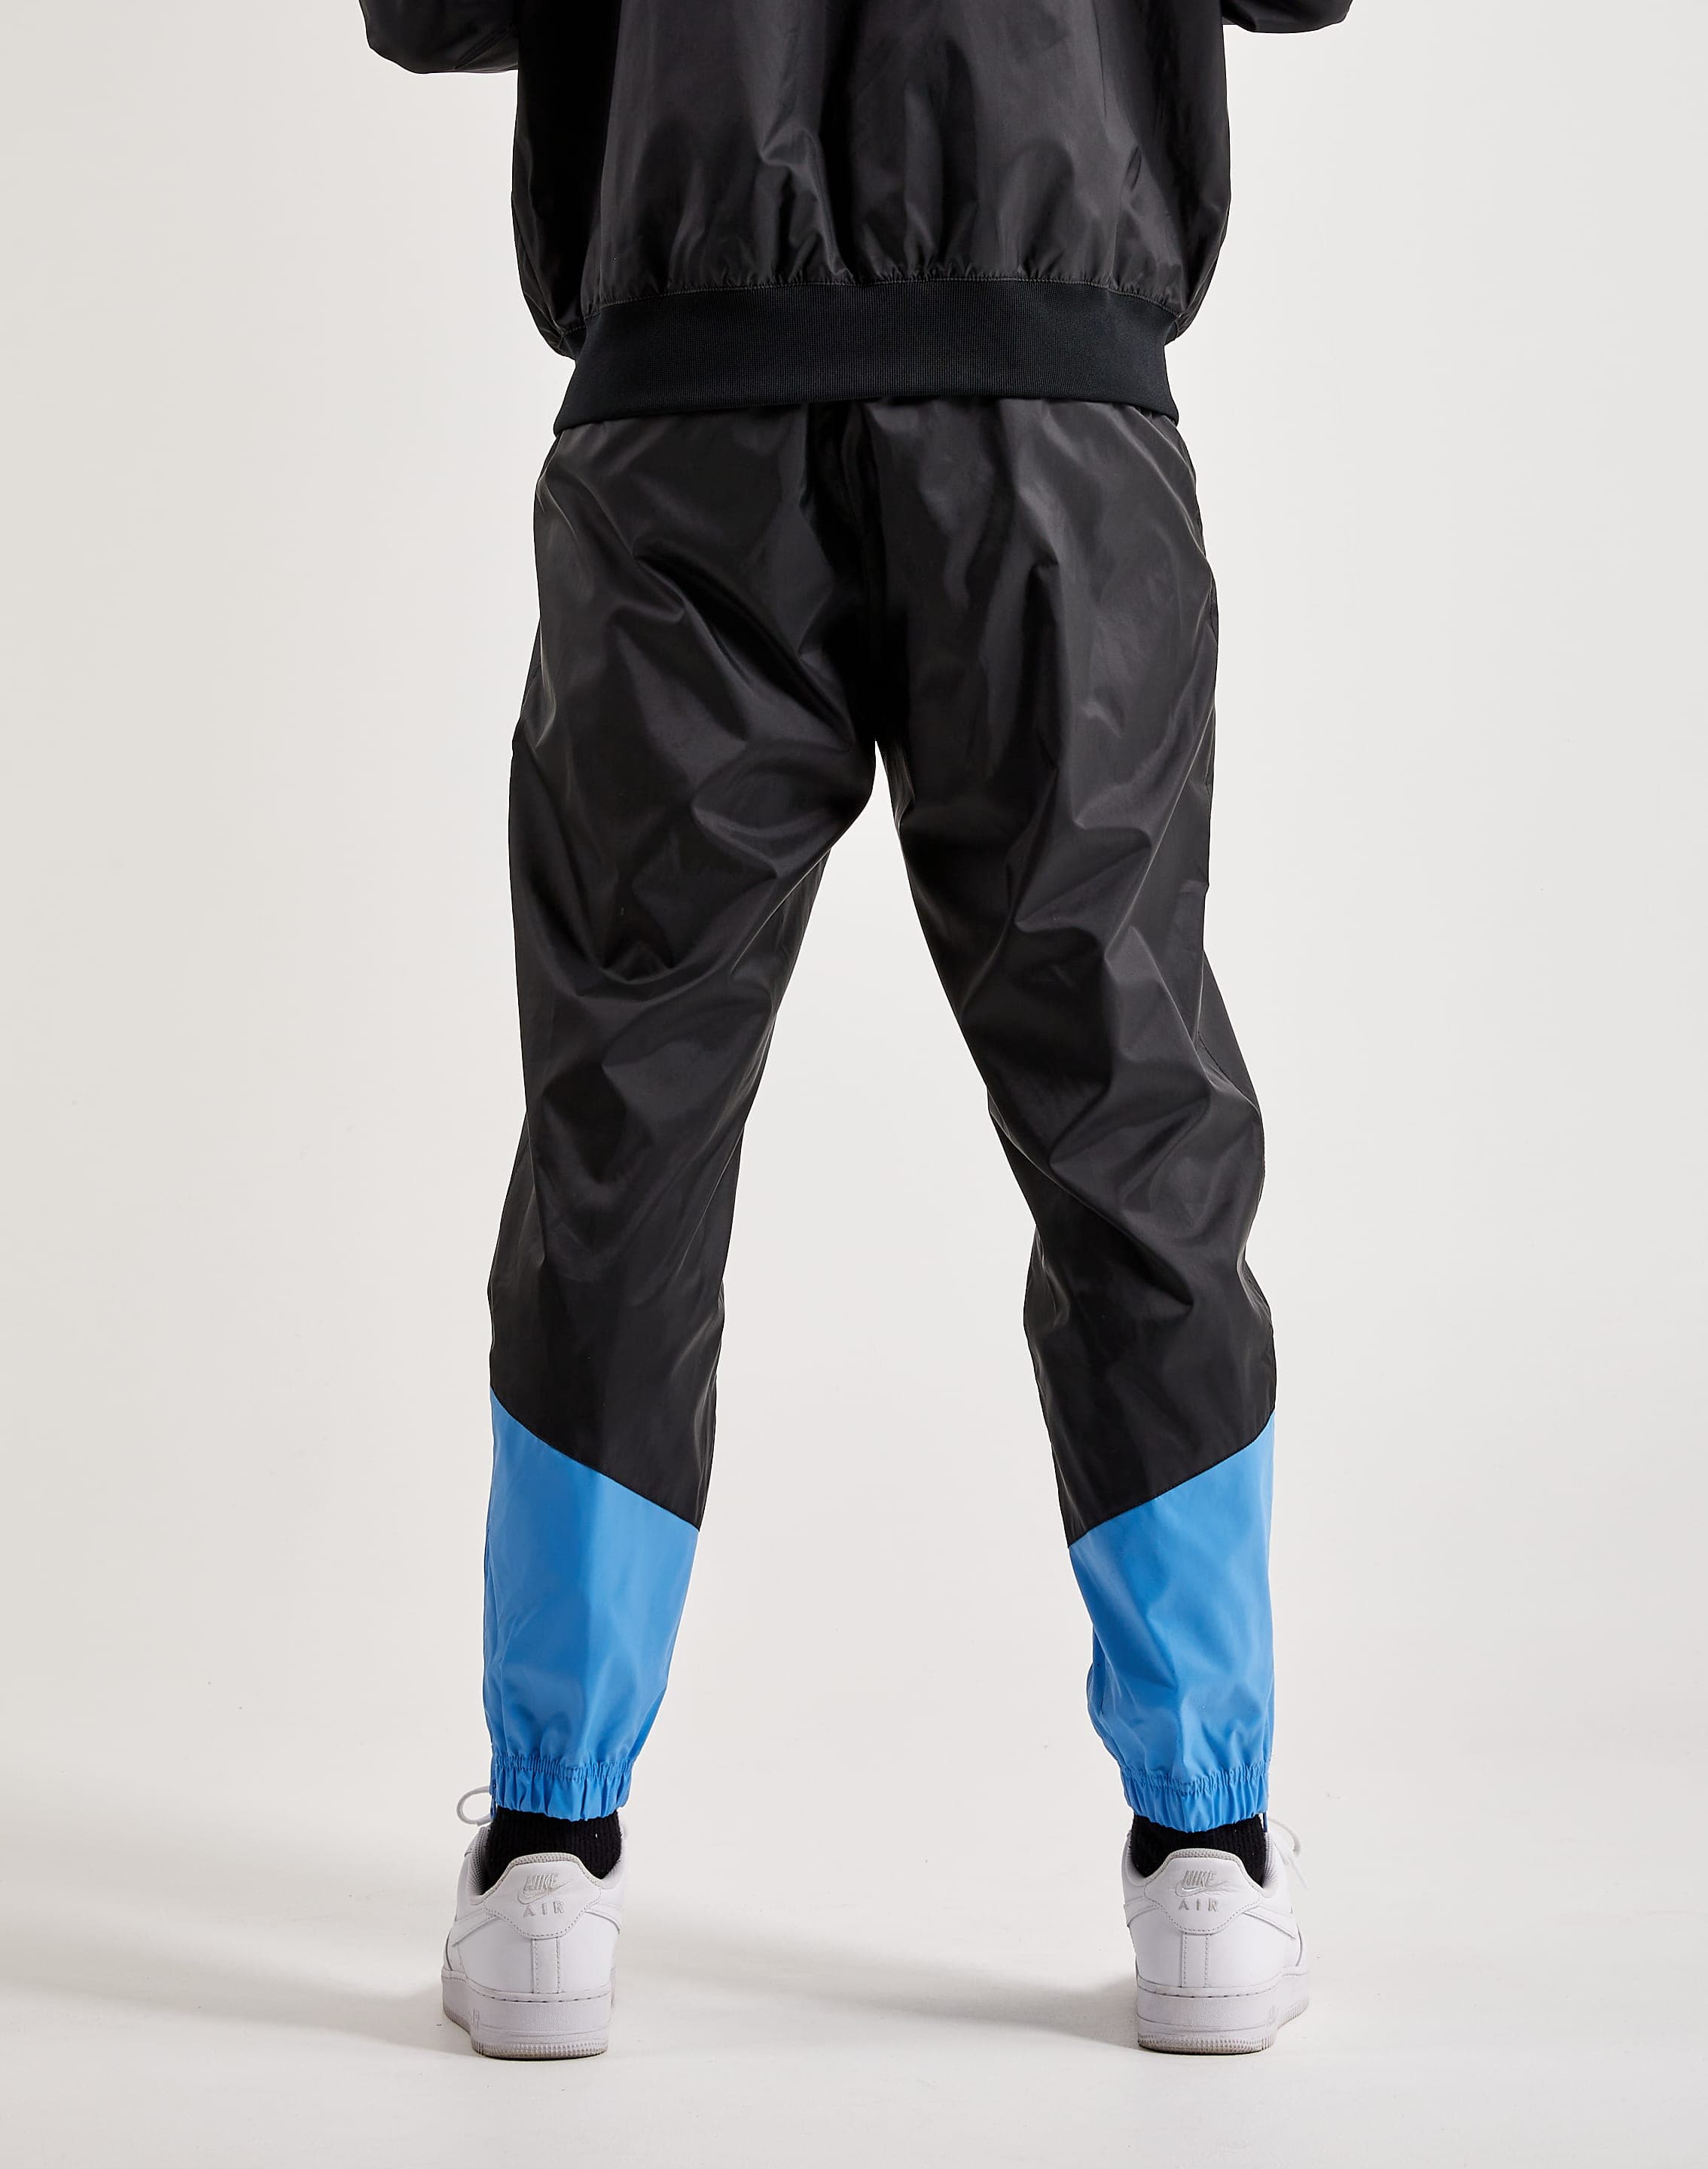 Nike Windrunner Mens Woven Lined Pants Nikecom